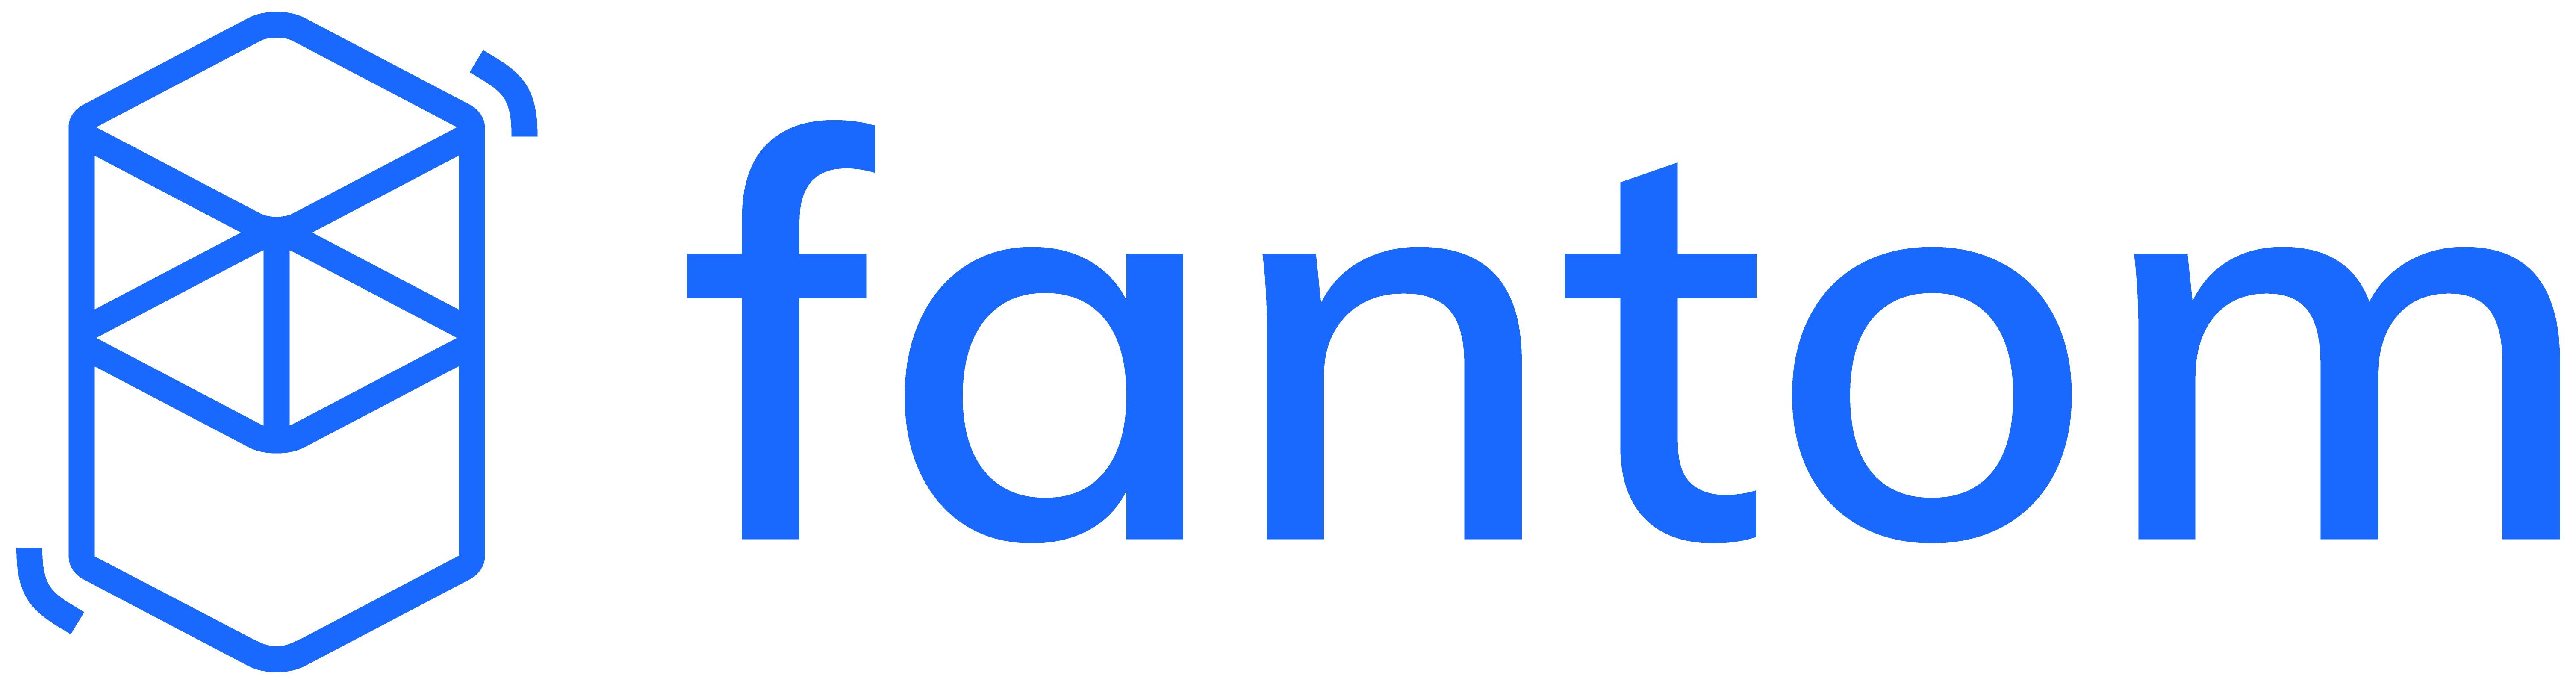 Foto de logotipo de criptografia fantom